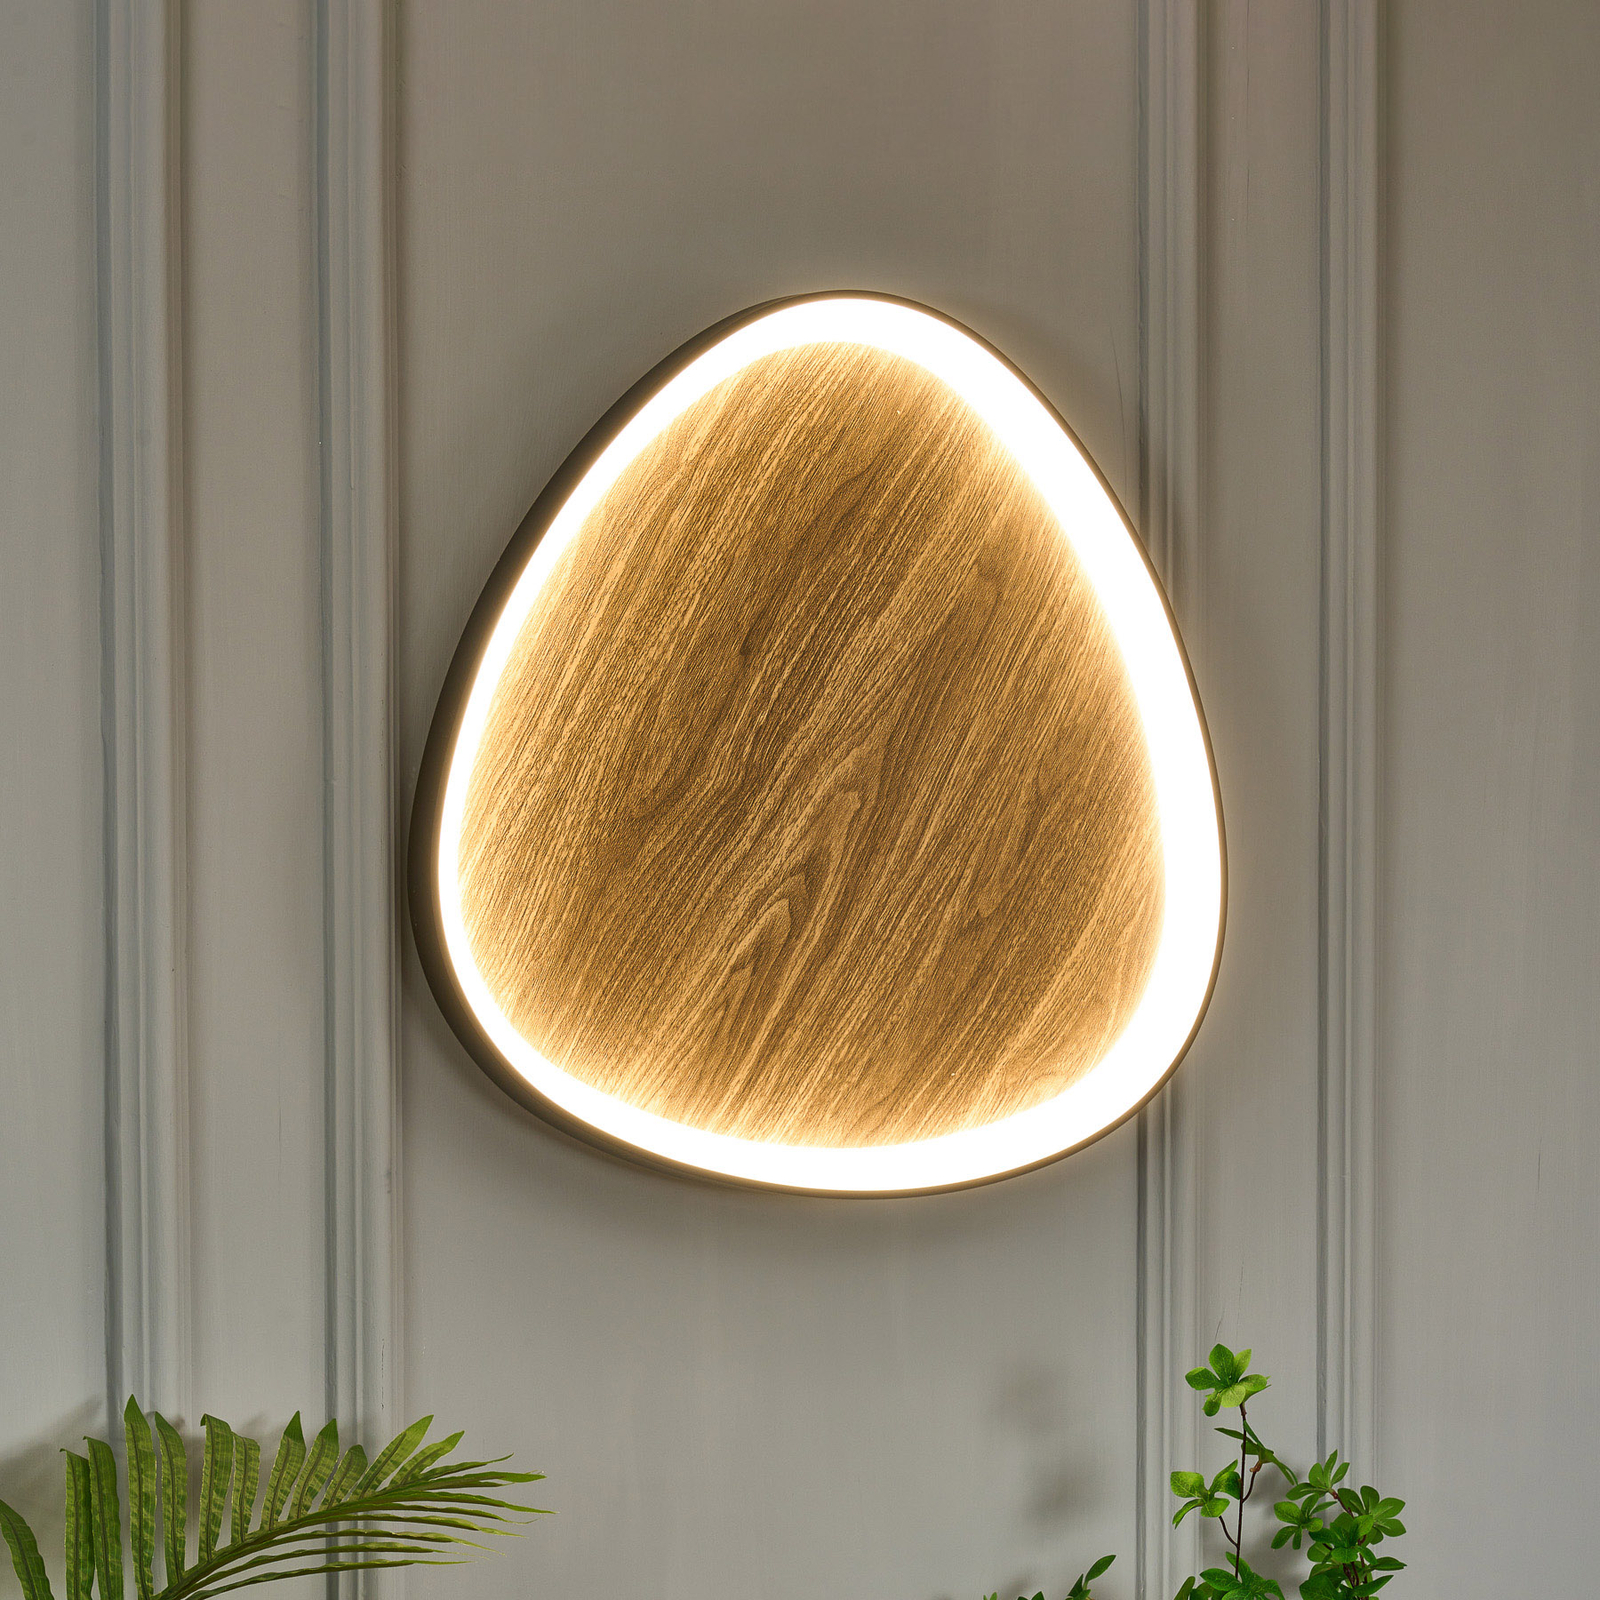 LED wall light Bezi, light wood, Ø 65 cm, wood, CCT